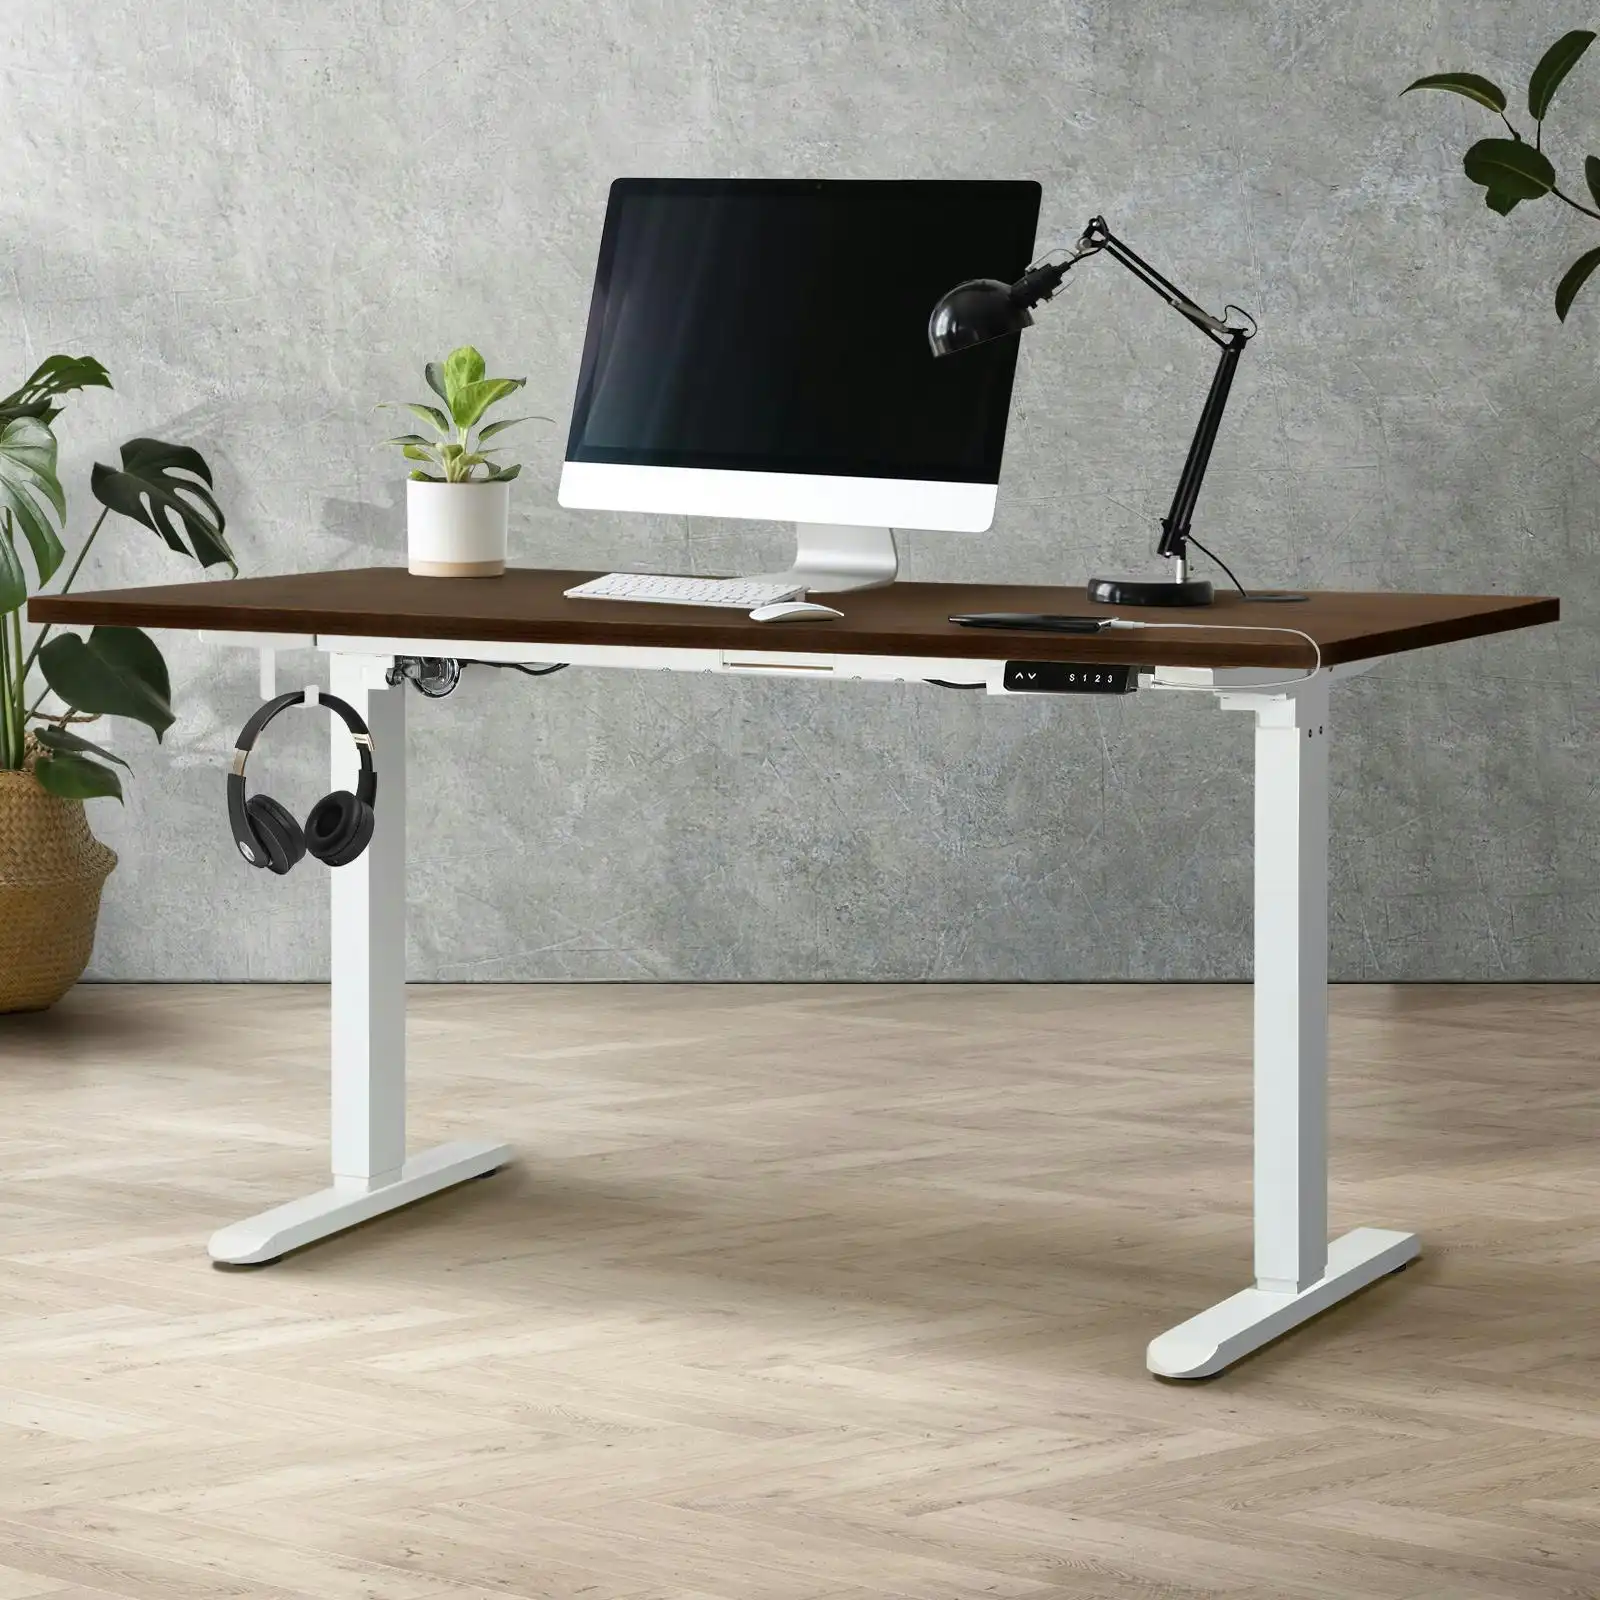 Oikiture 140cm Electric Standing Desk Single Motor White Frame Walnut Desktop With USB&Type C Port